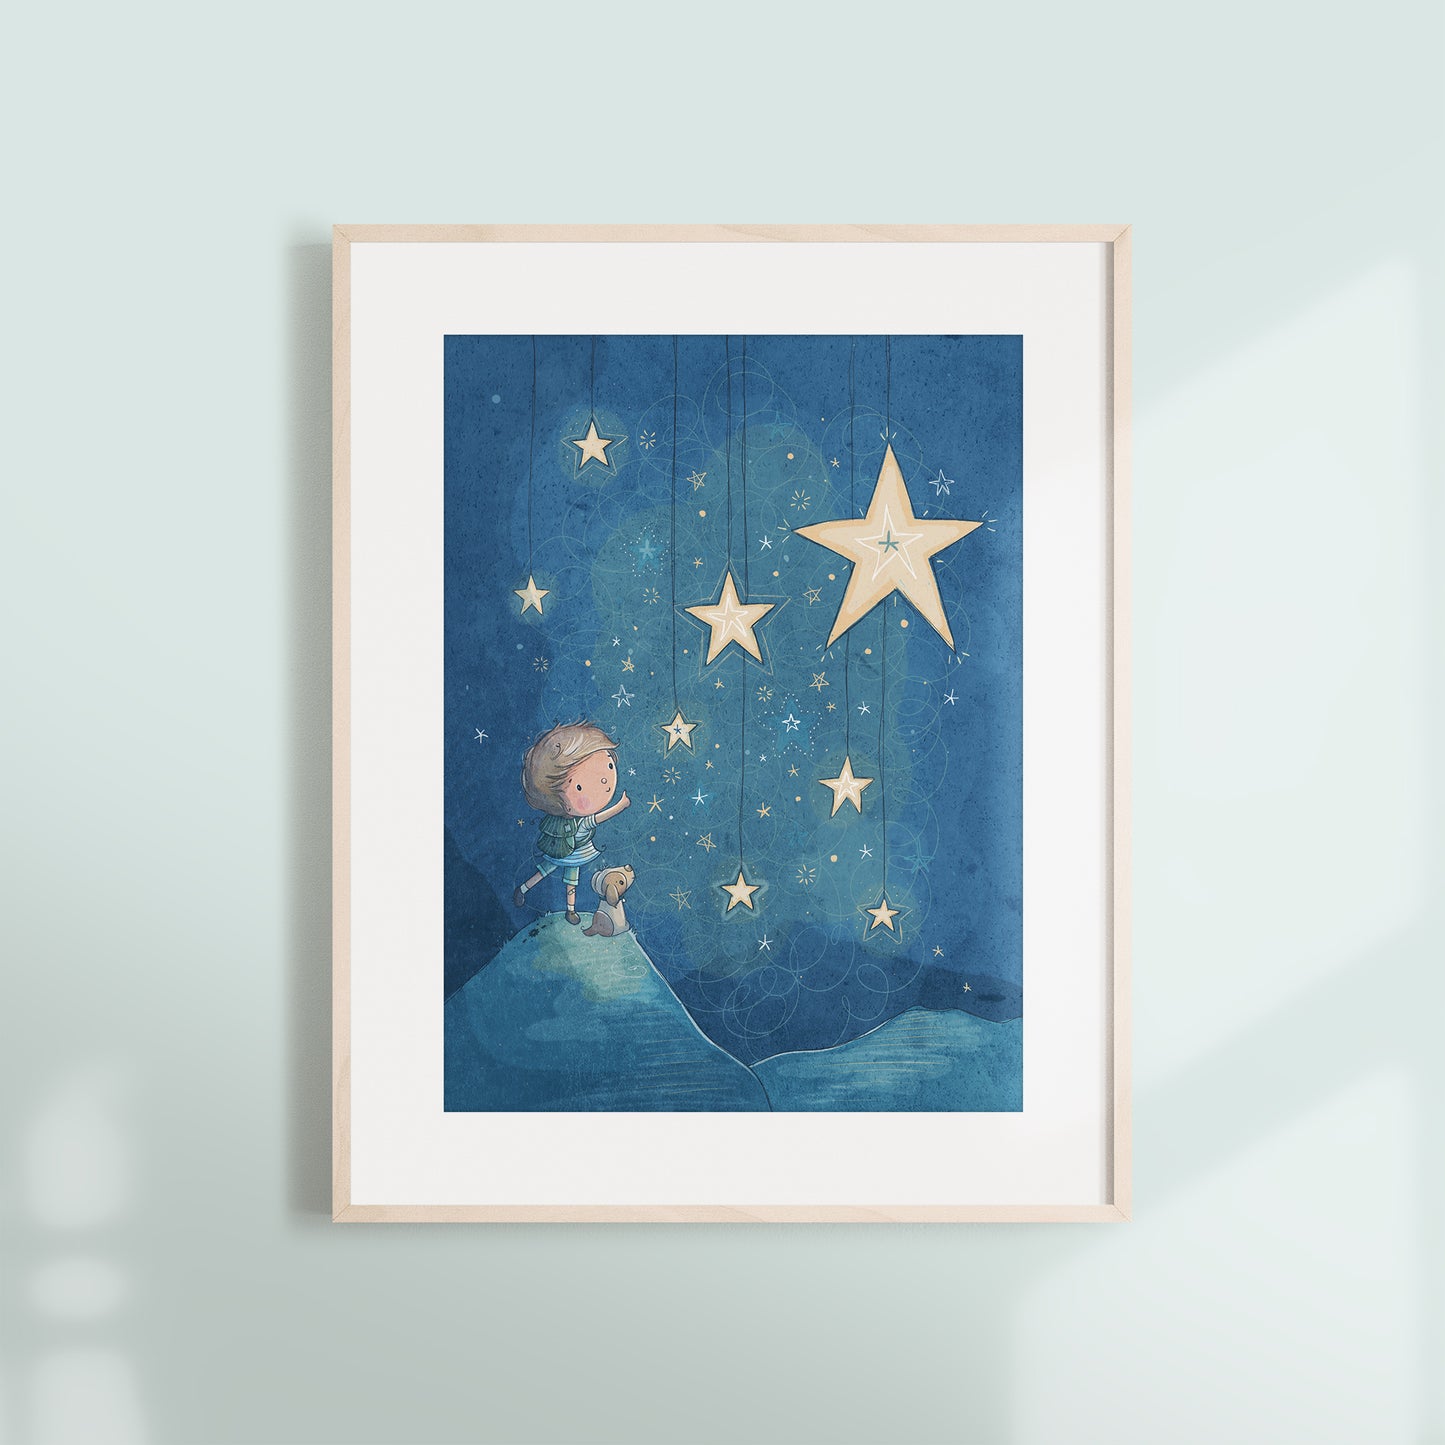 'Make a Wish' Children's Wall Art Print